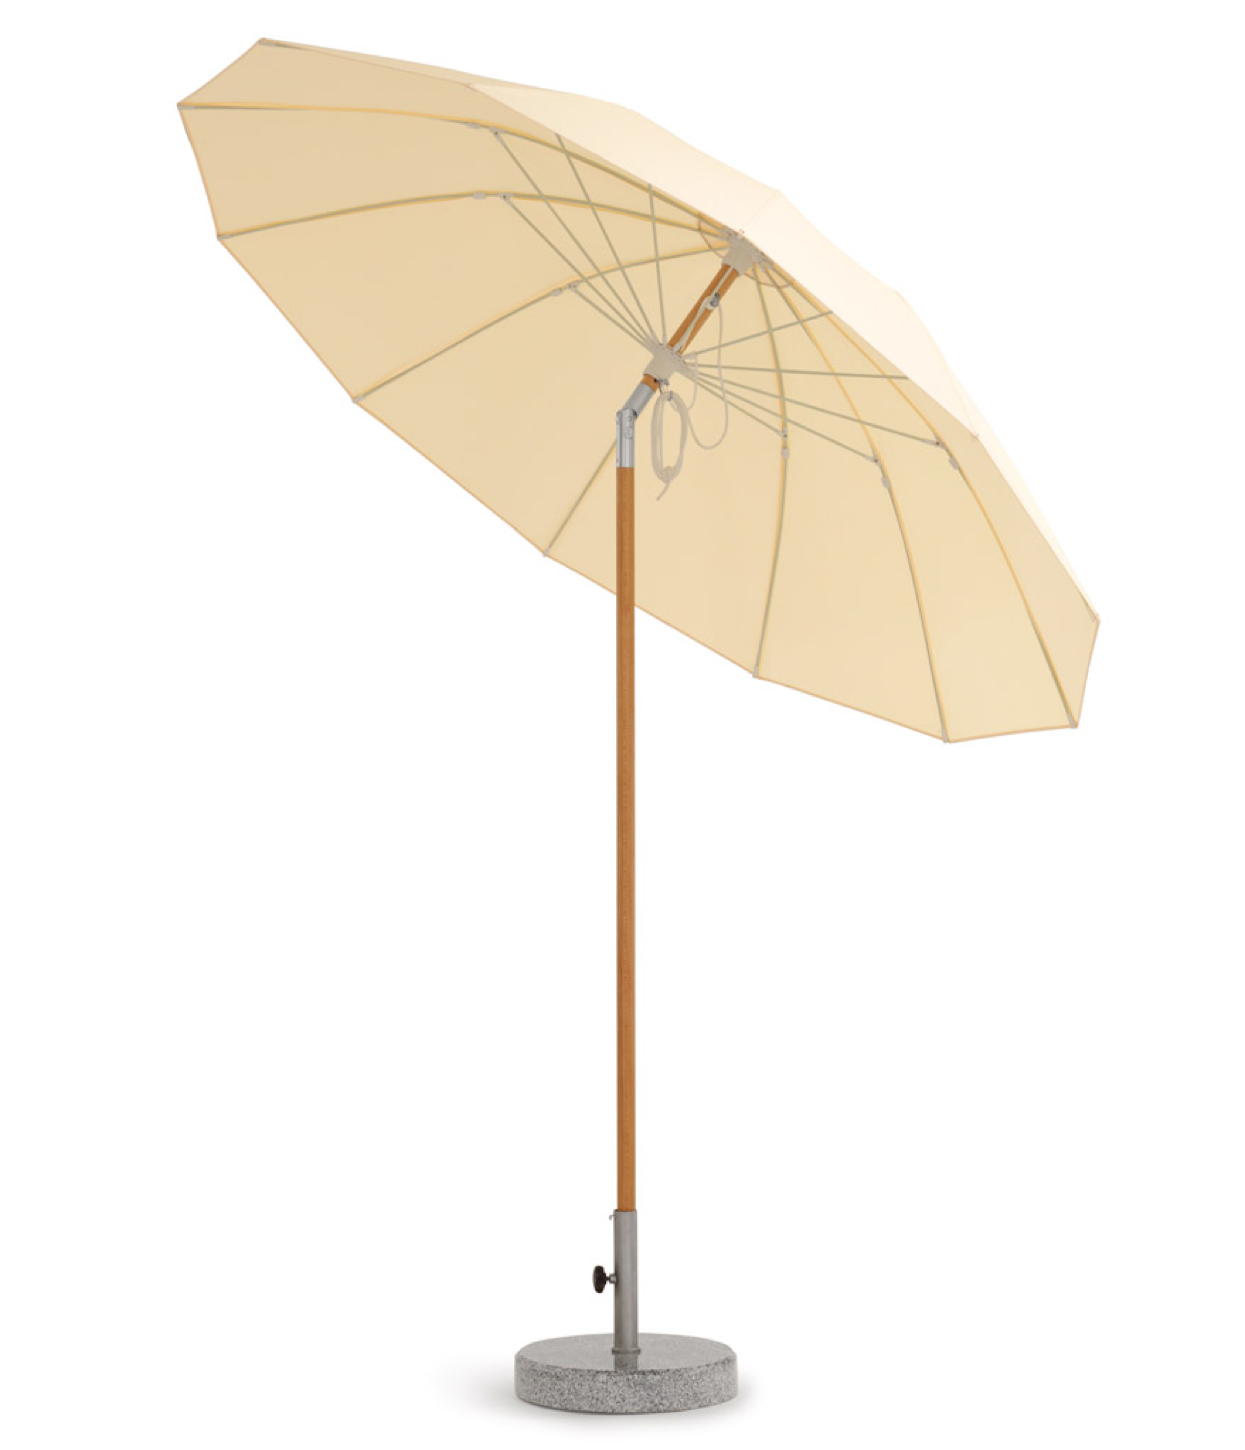 Sonnenschirm Weishupl Pagoden Schirm mit Knick Holzgestell Acryl BUNT